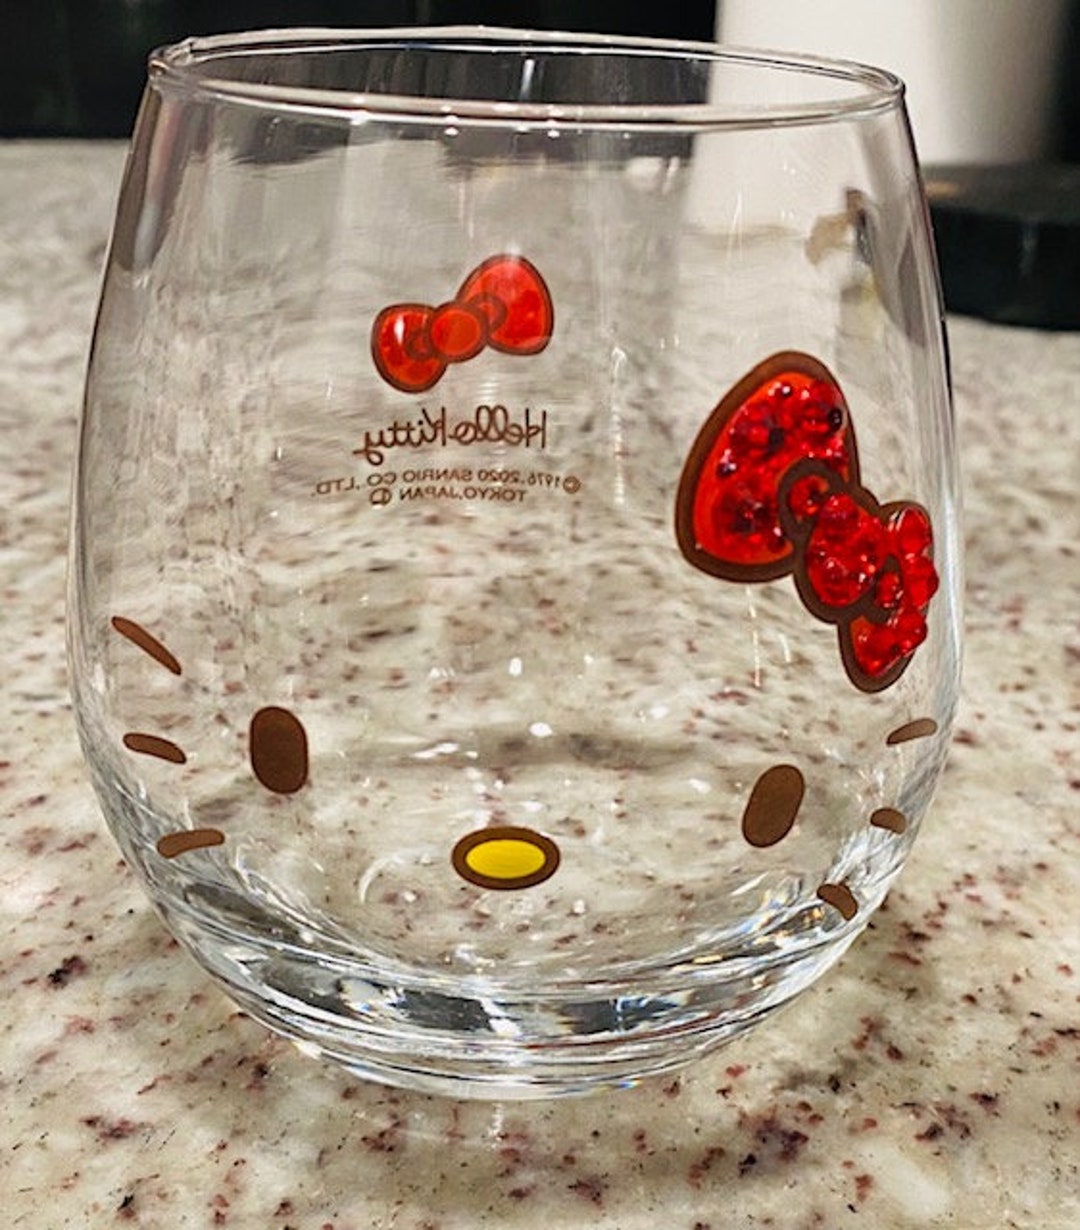 Sanrio Hello Kitty Teardrop Stemless Wine Glass